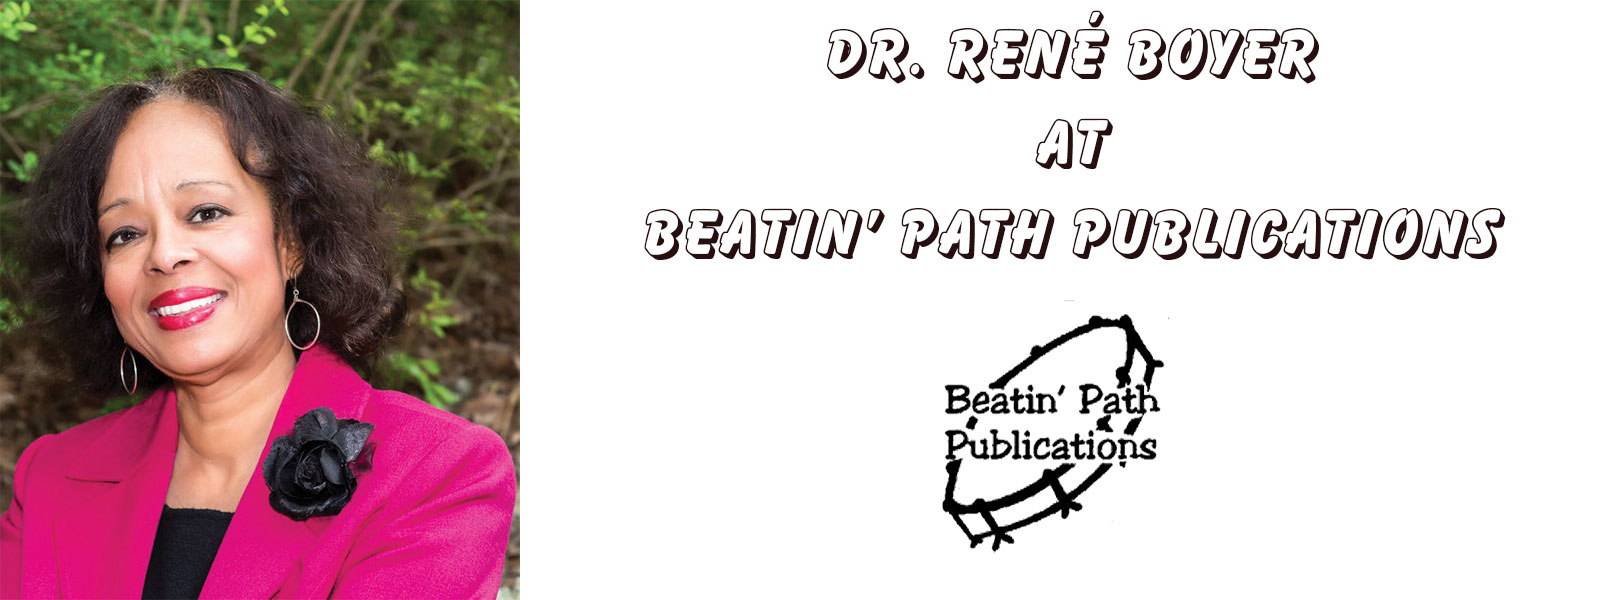 Dr. René Boyer at Beatin' Path Publications